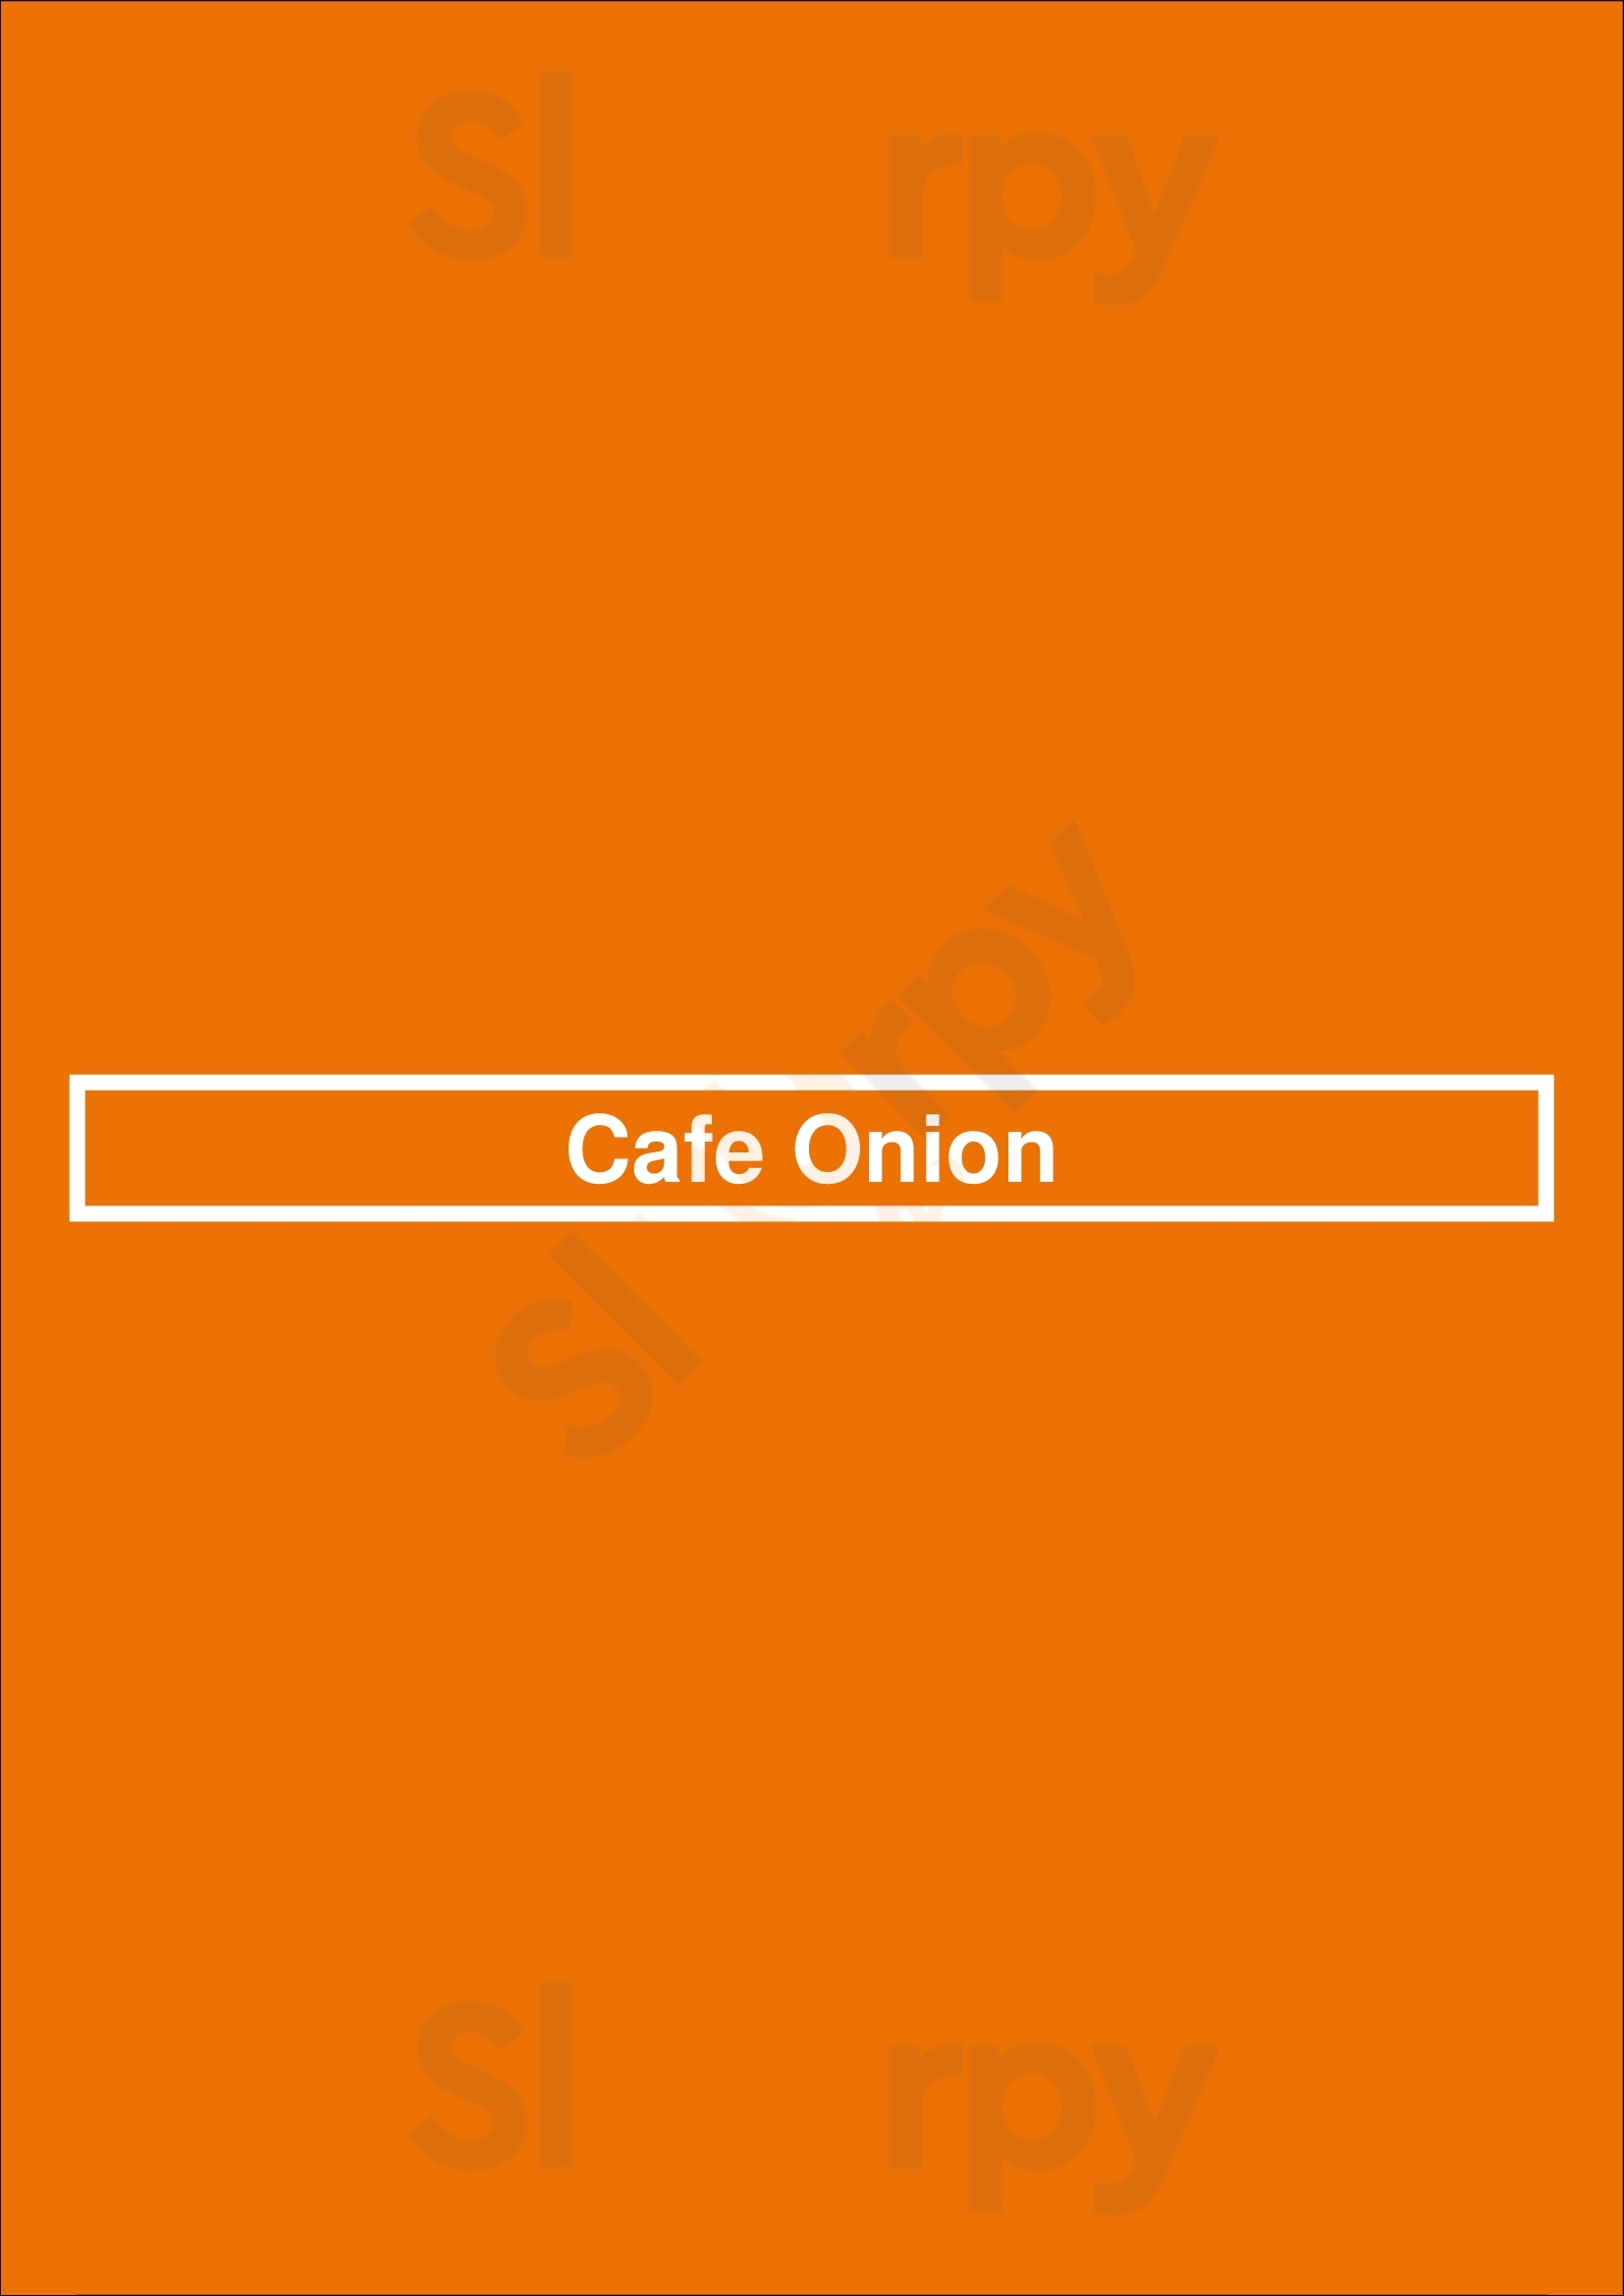 Cafe Onion Belfast Menu - 1